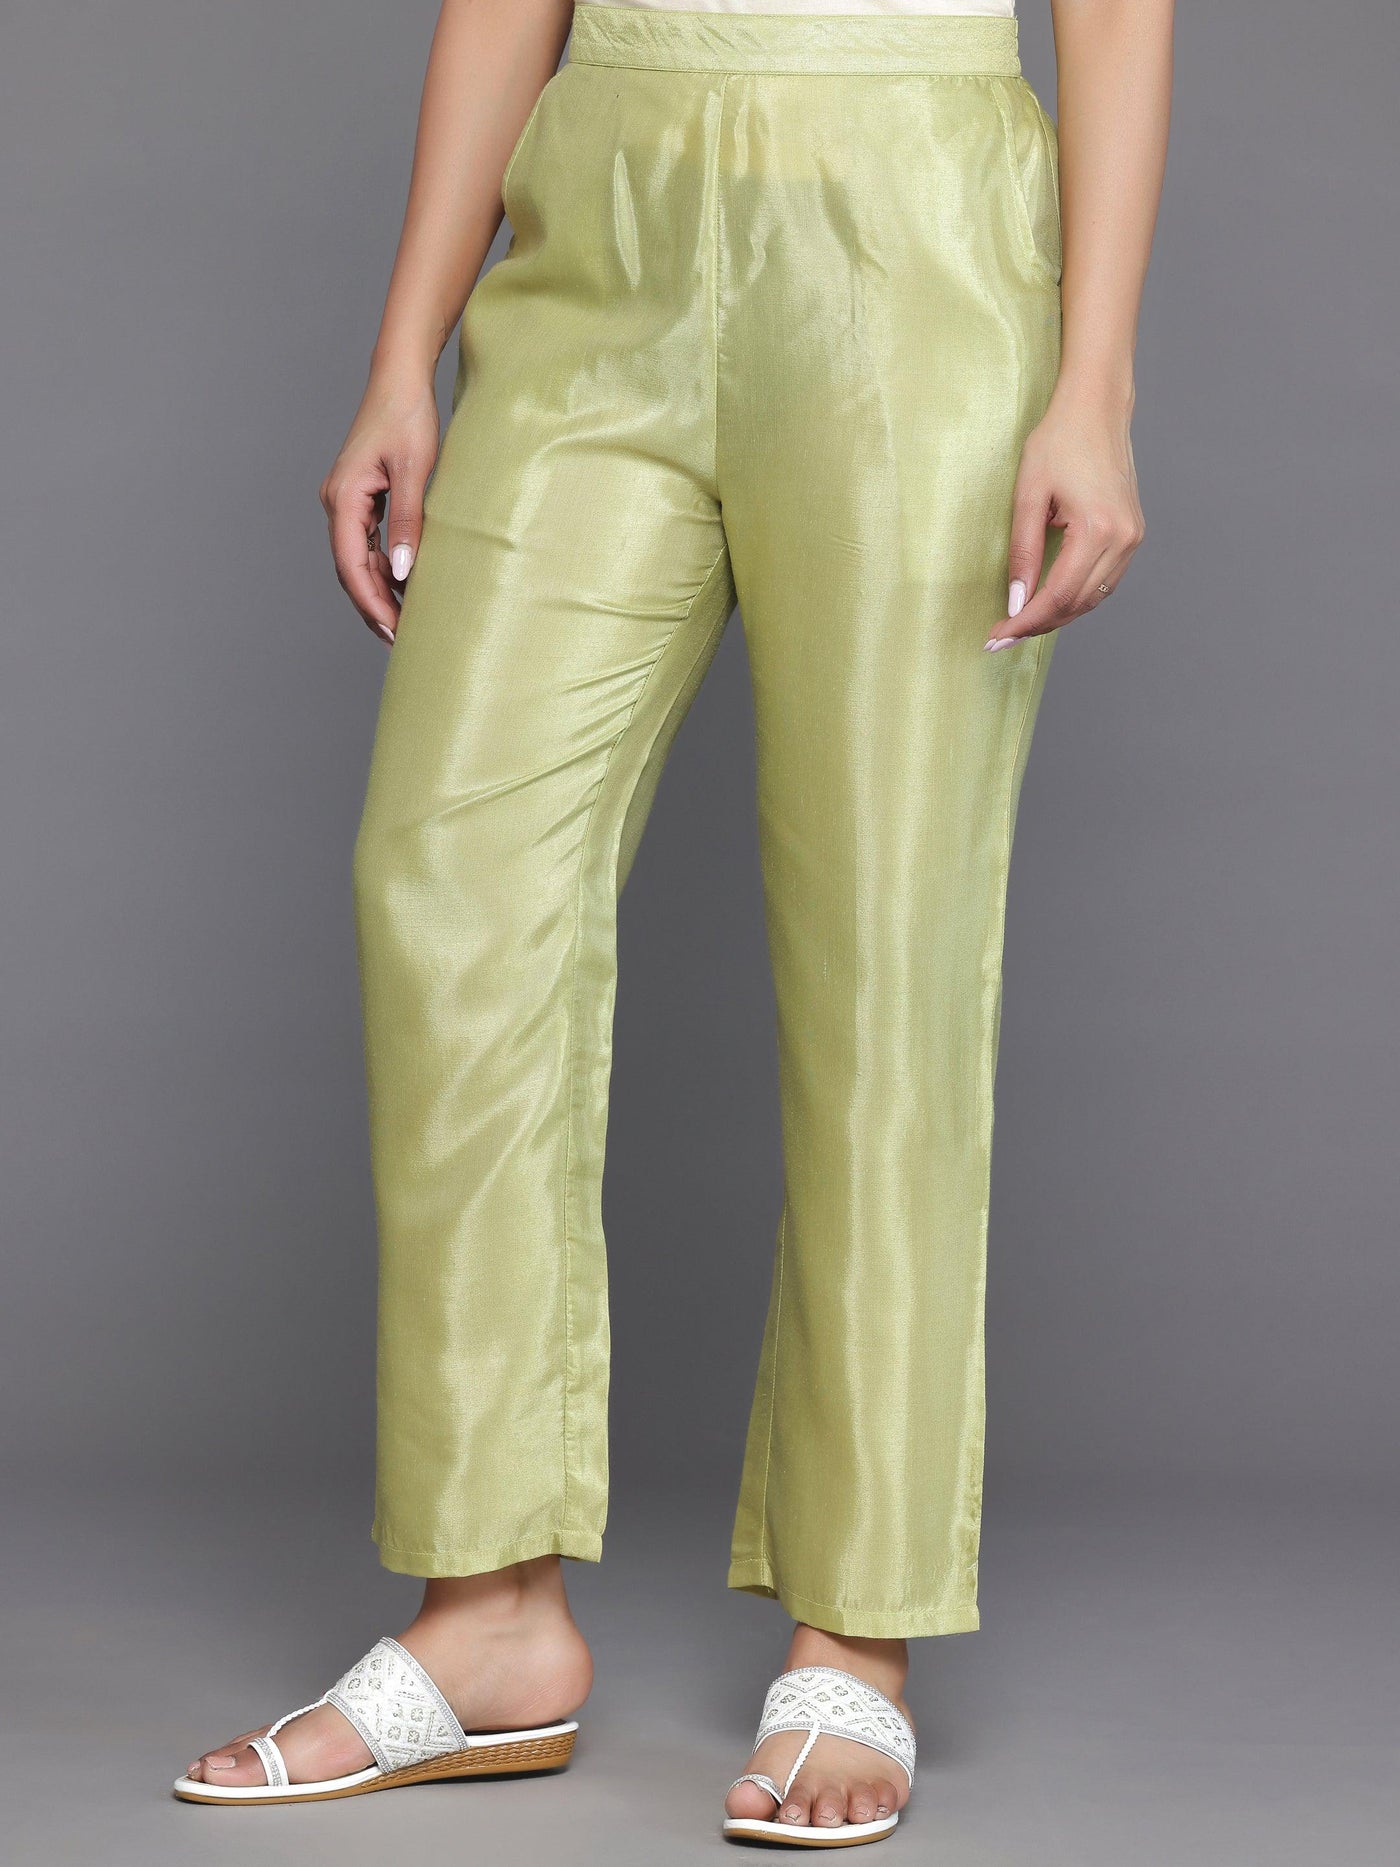 Green Printed Silk Blend A-Line Kurta With Trousers - Libas